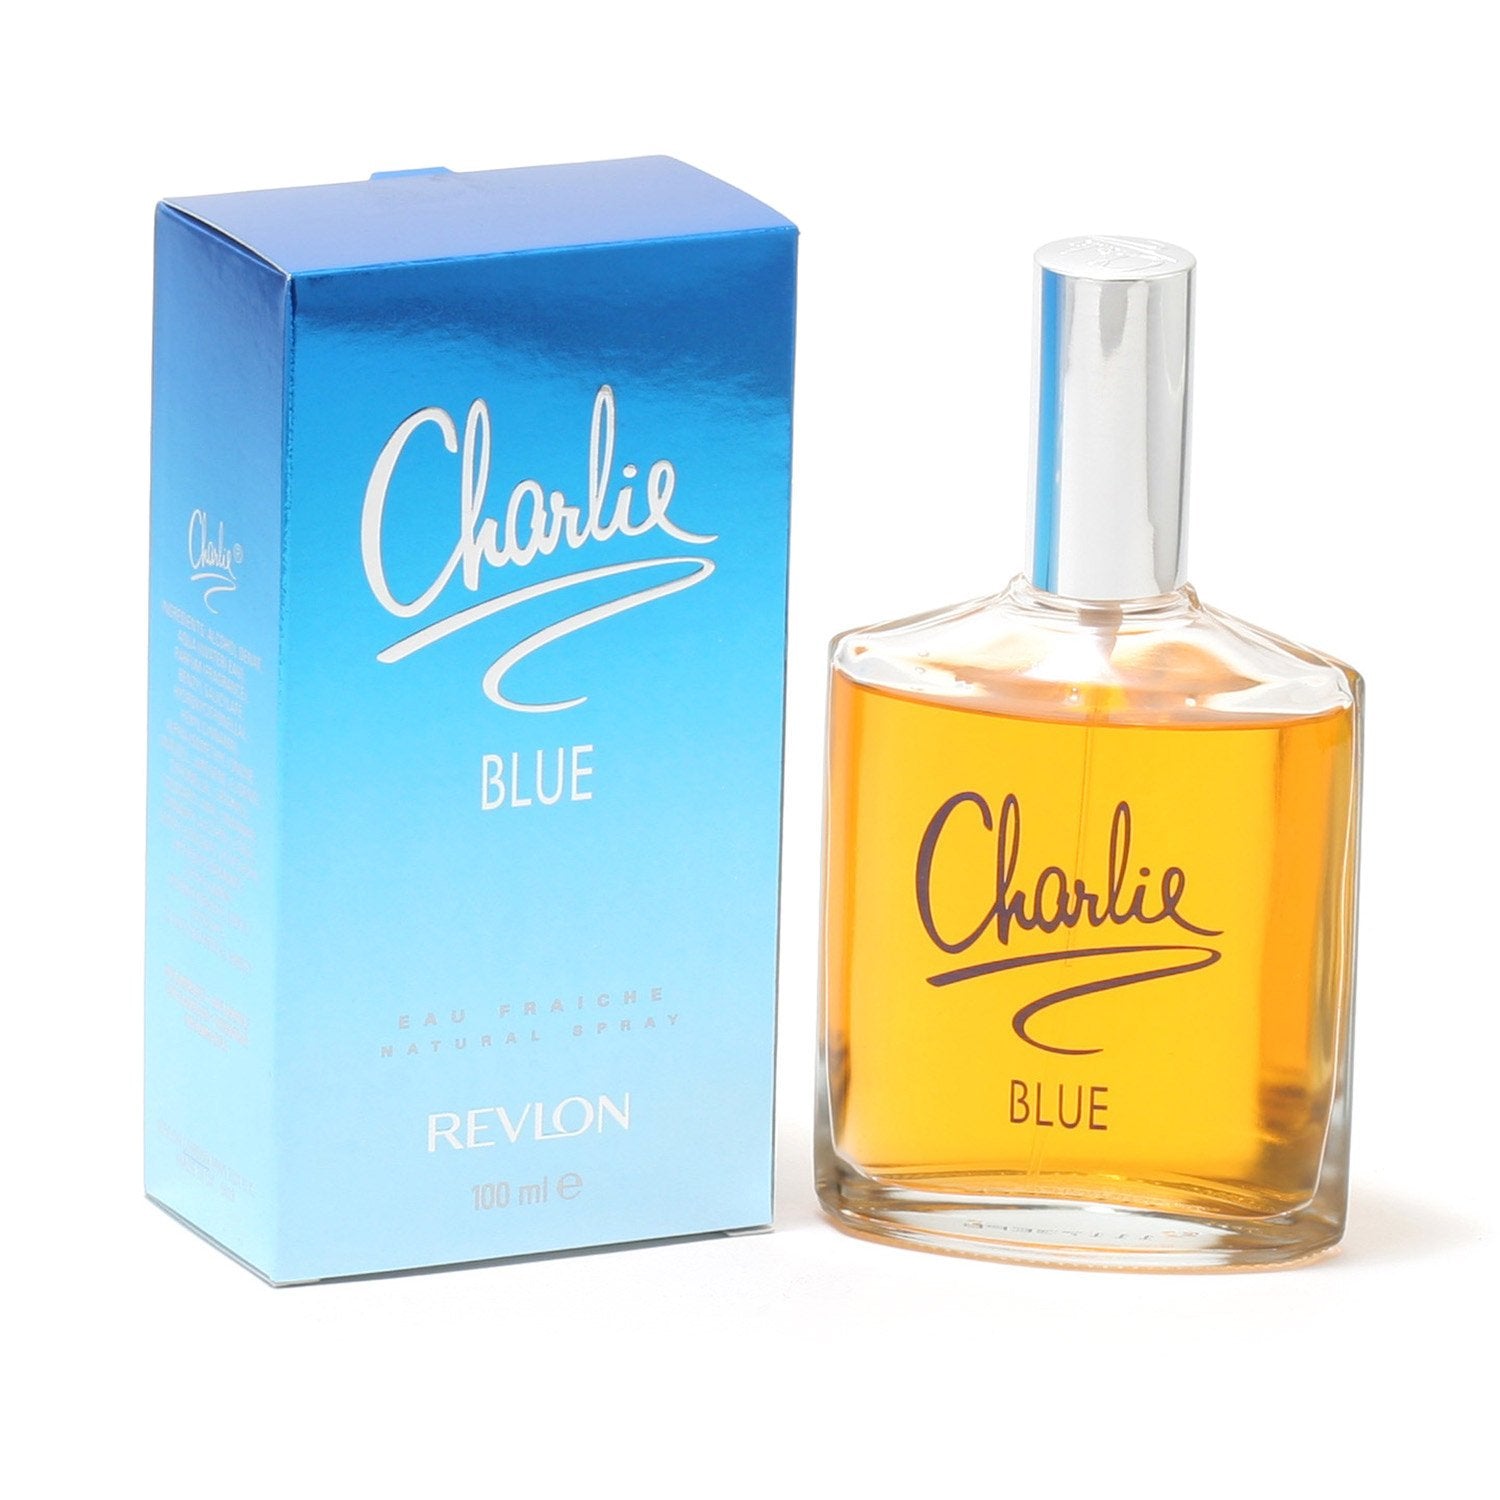 Perfume - CHARLIE BLUE FOR WOMEN BY REVLON - EAU FRAICHE SPRAY, 3.4 OZ